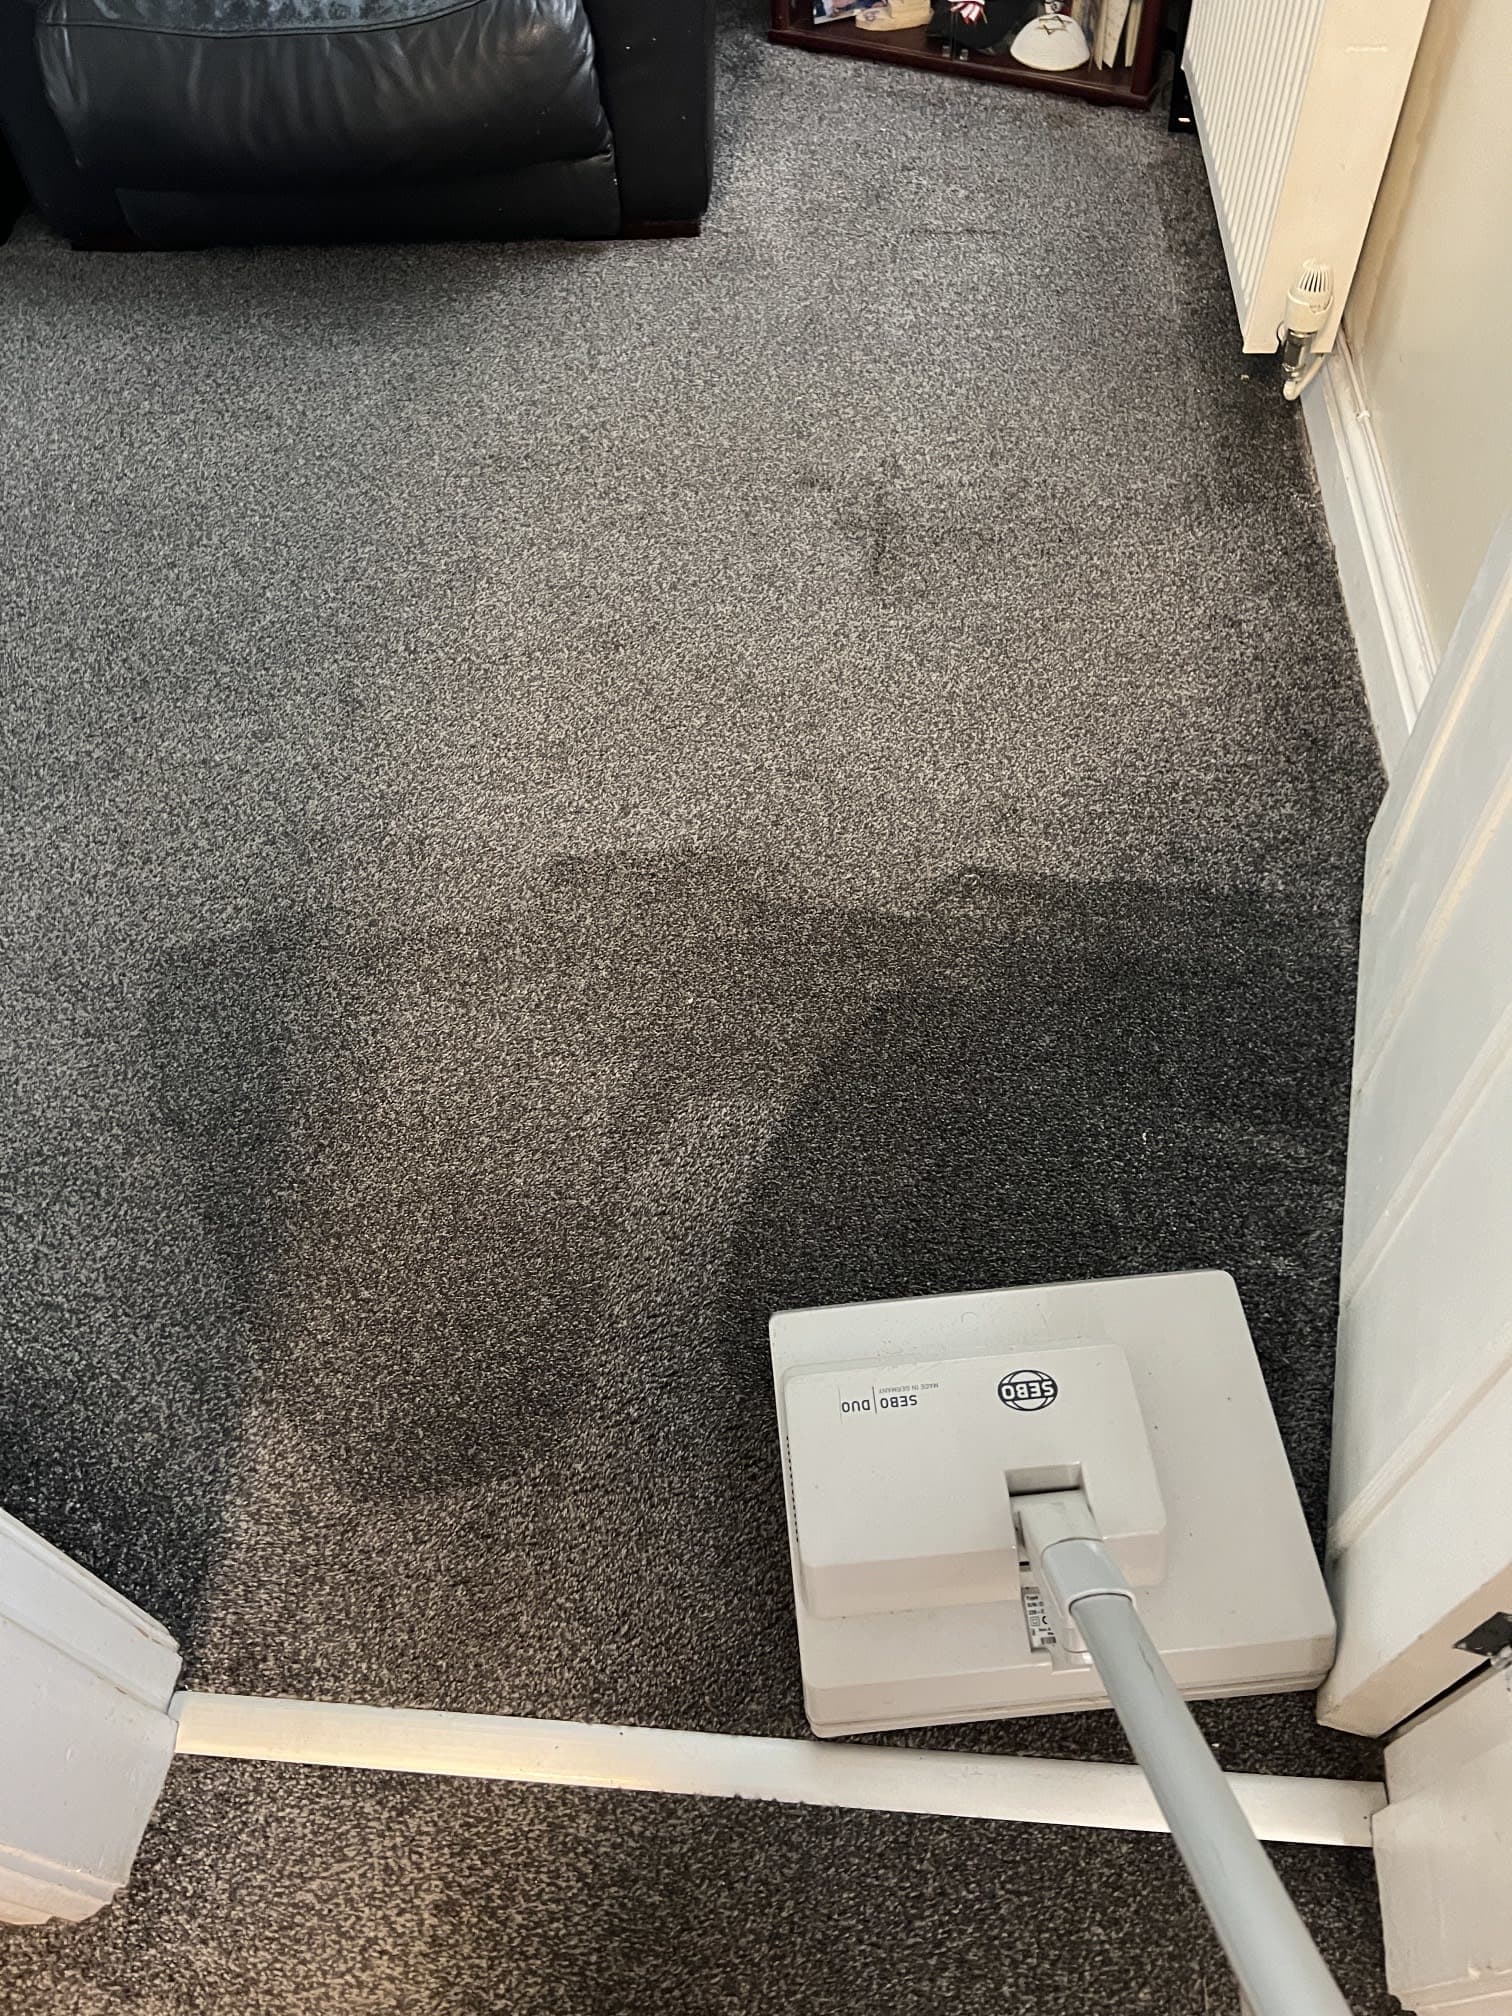 Dedu's Carpet Cleaning Huddersfield 07407 200148